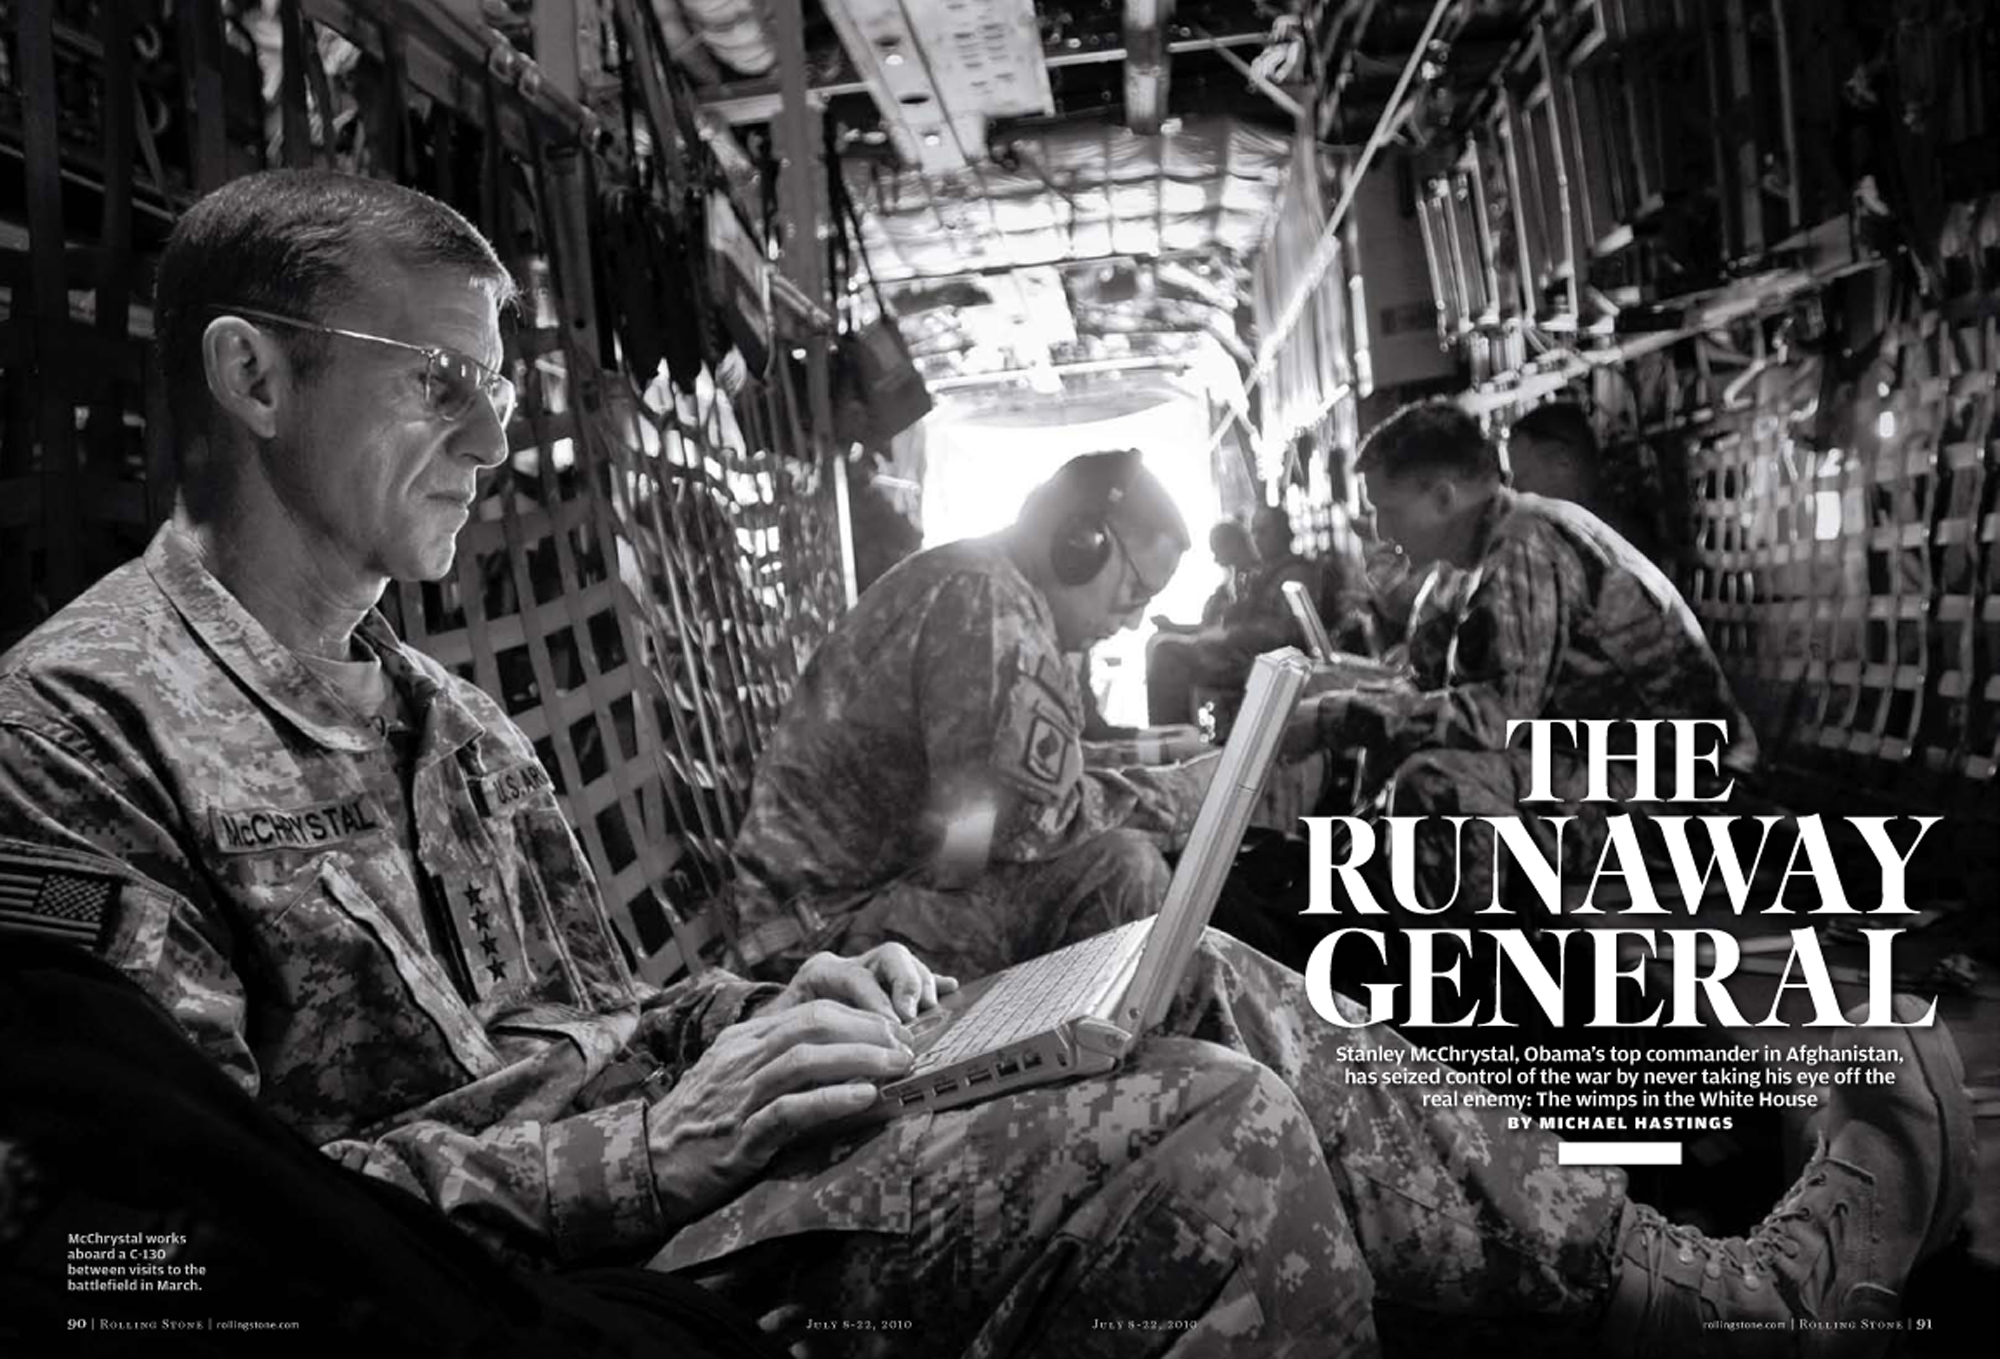 Stanley McChrystal, Rolling Stone, Afghanistan, Barack Obama